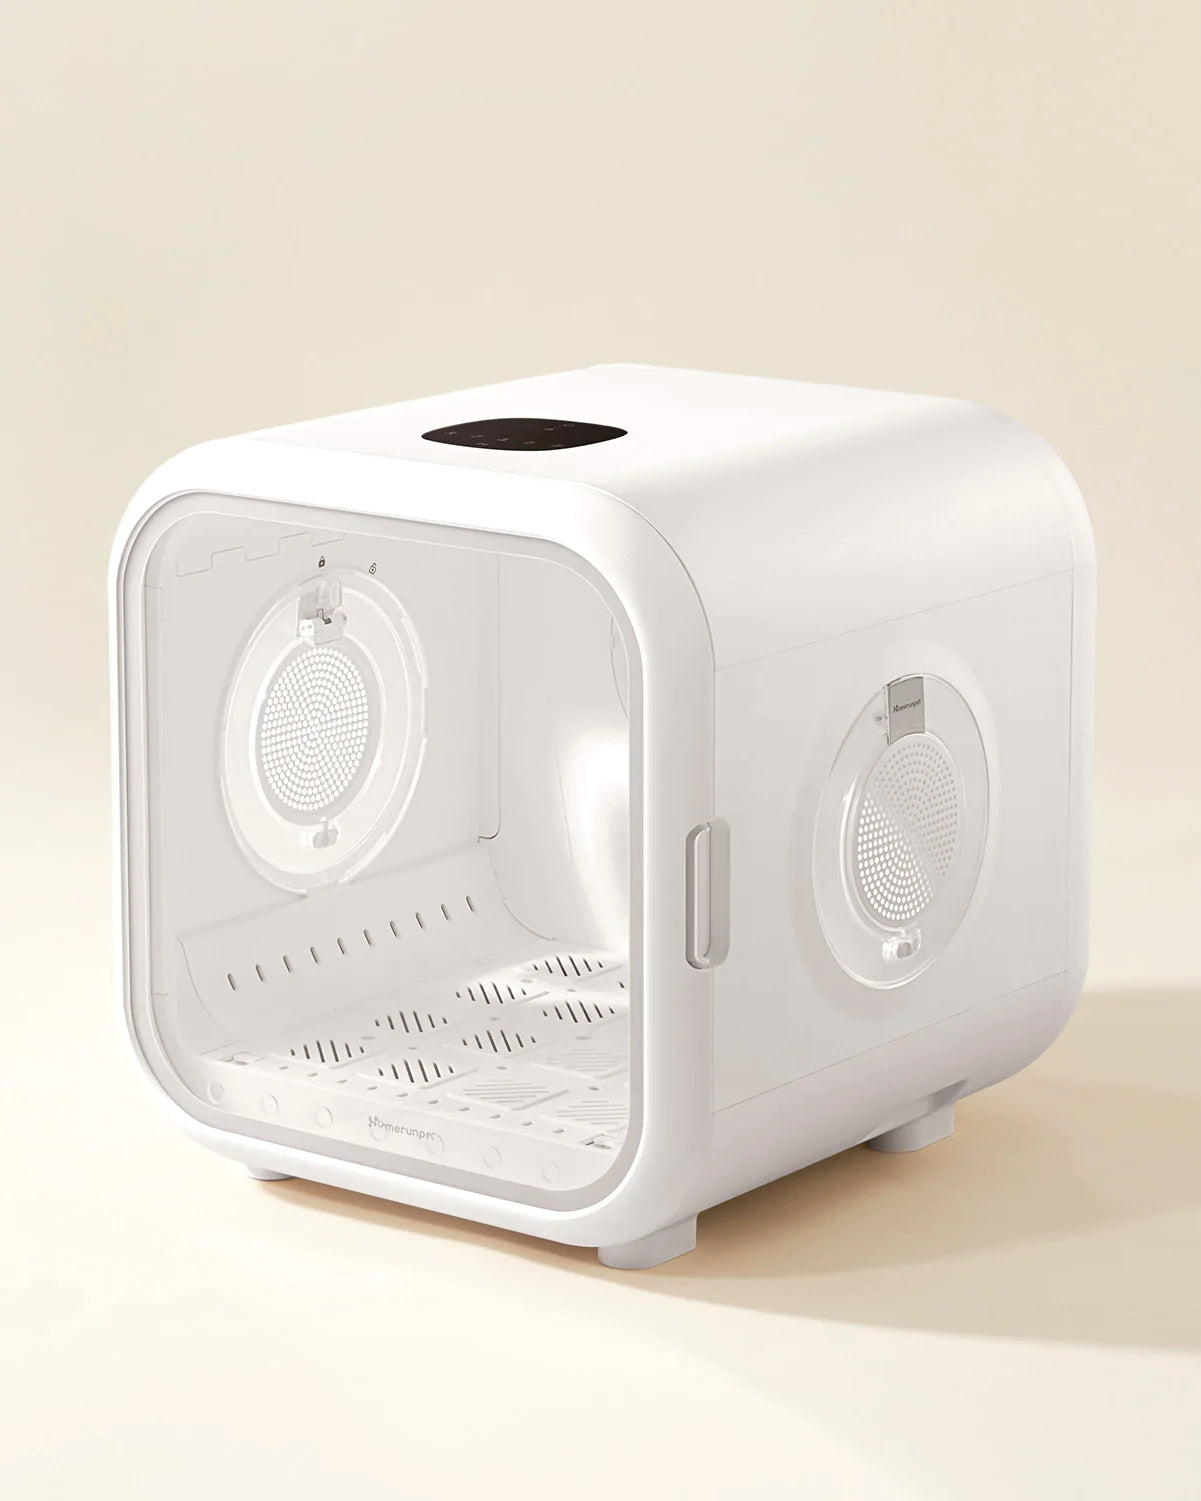 Drybo Plus Smart Pet Dryer